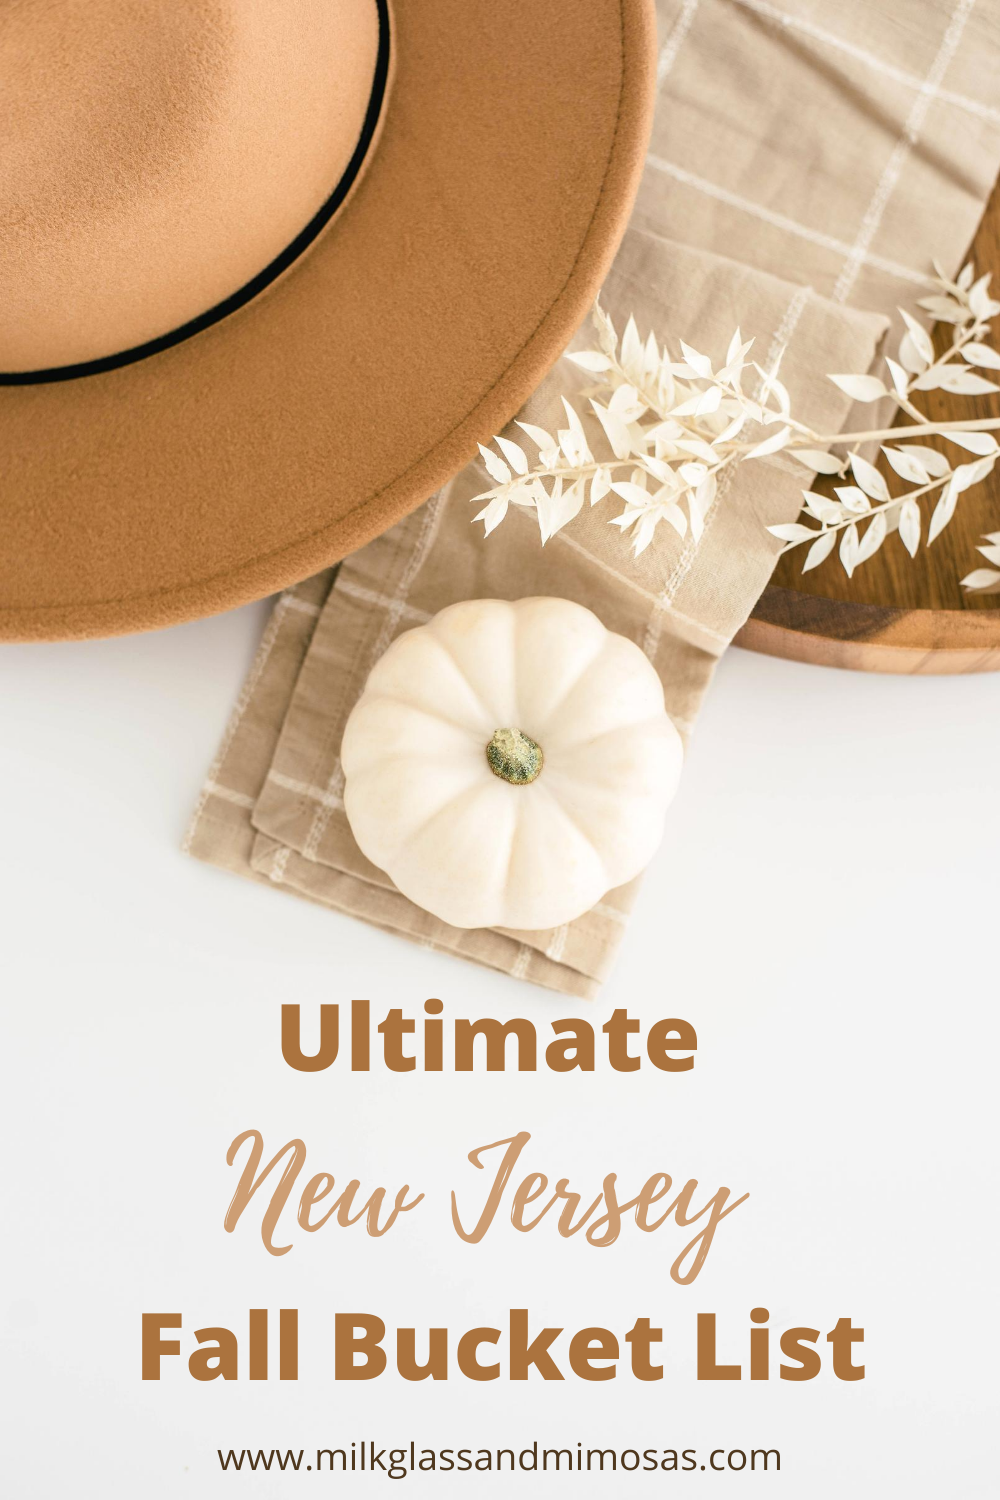 Ultimate New Jersey Fall Bucket List